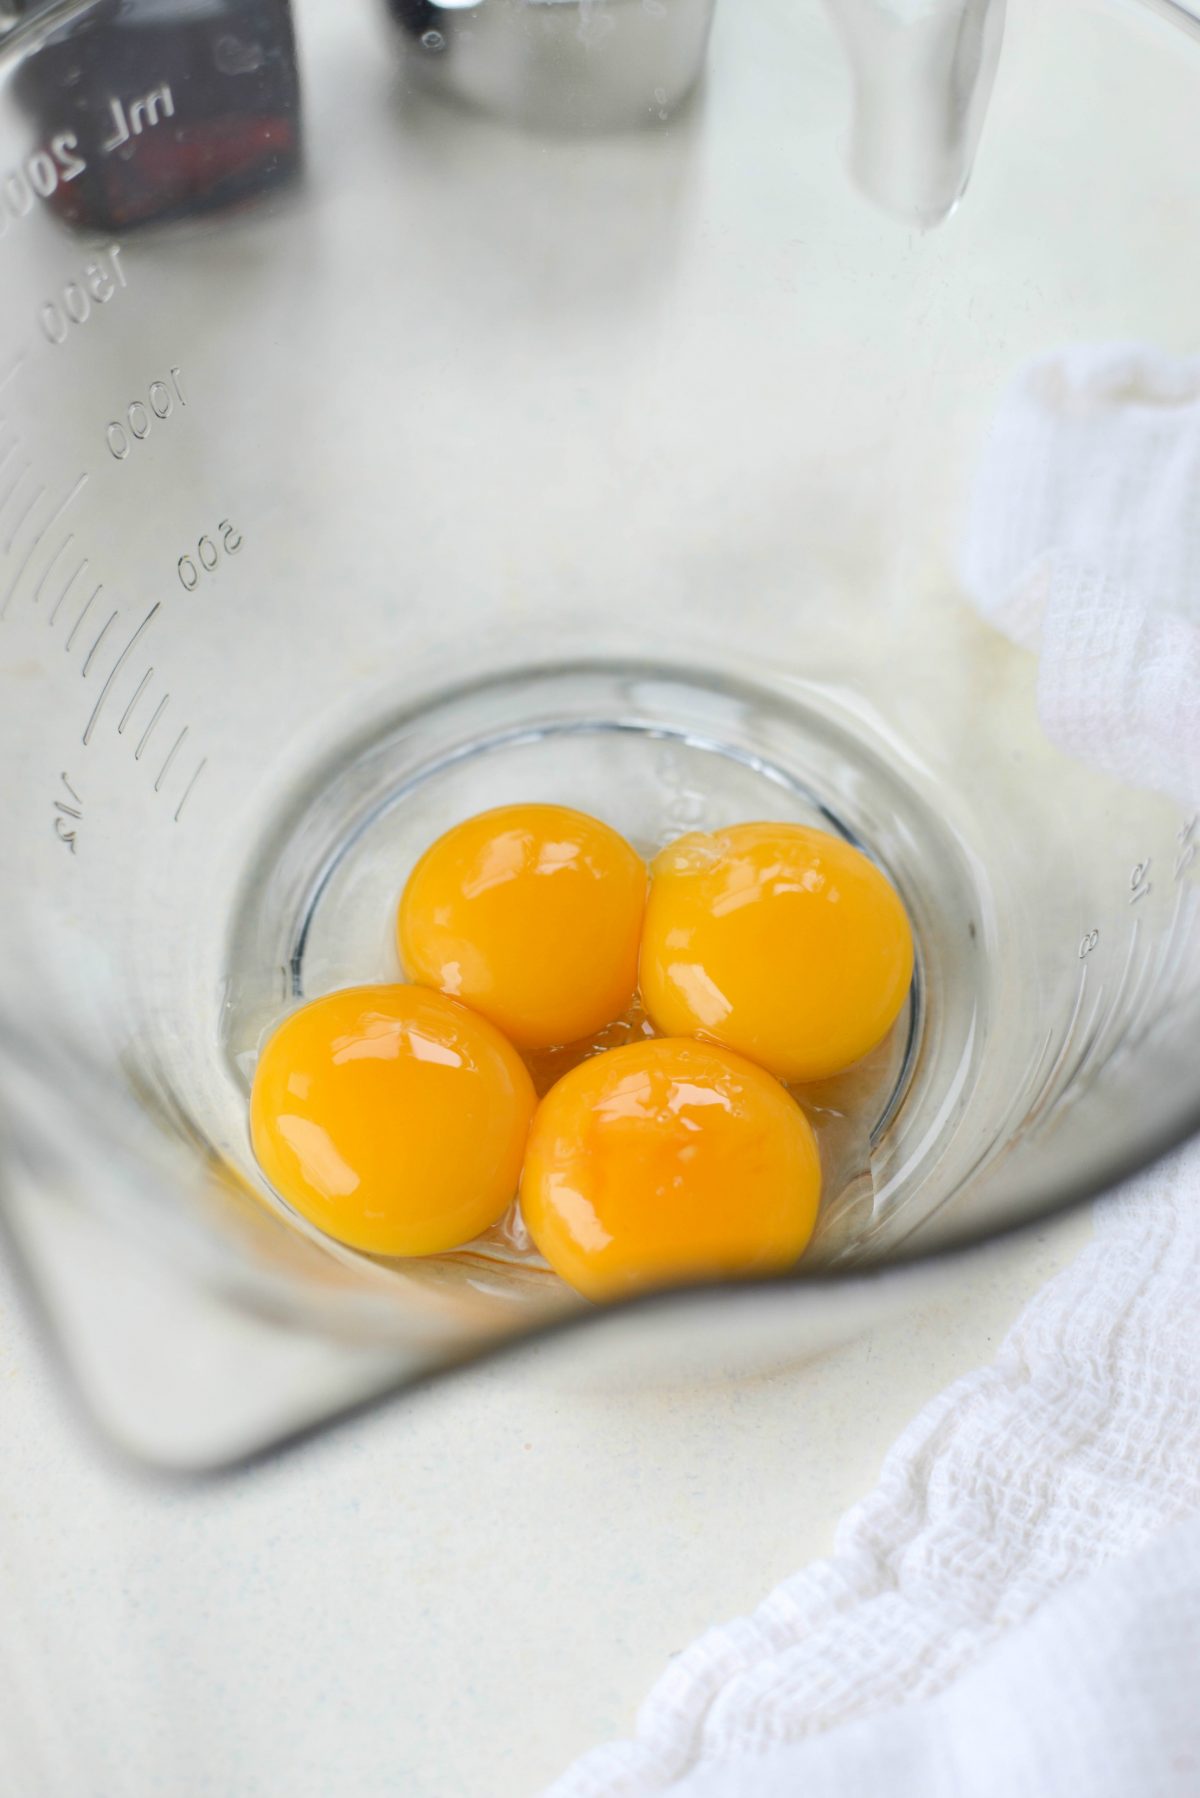 Add egg yolks to bowl